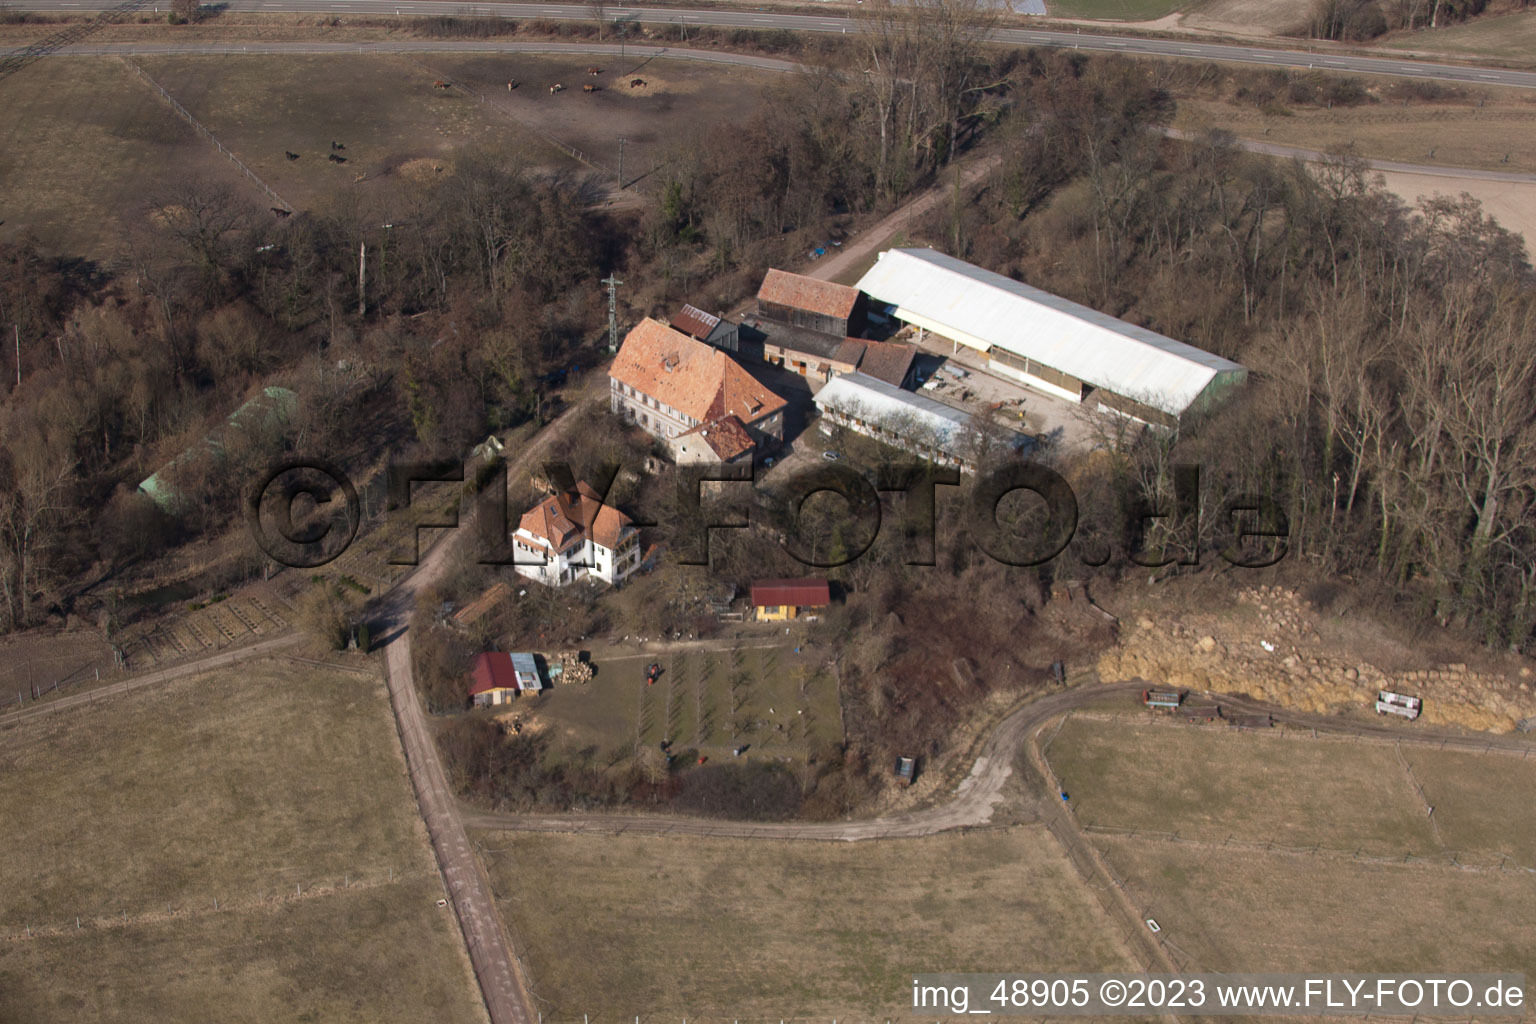 Drone image of Wanzheim Mill in Rheinzabern in the state Rhineland-Palatinate, Germany